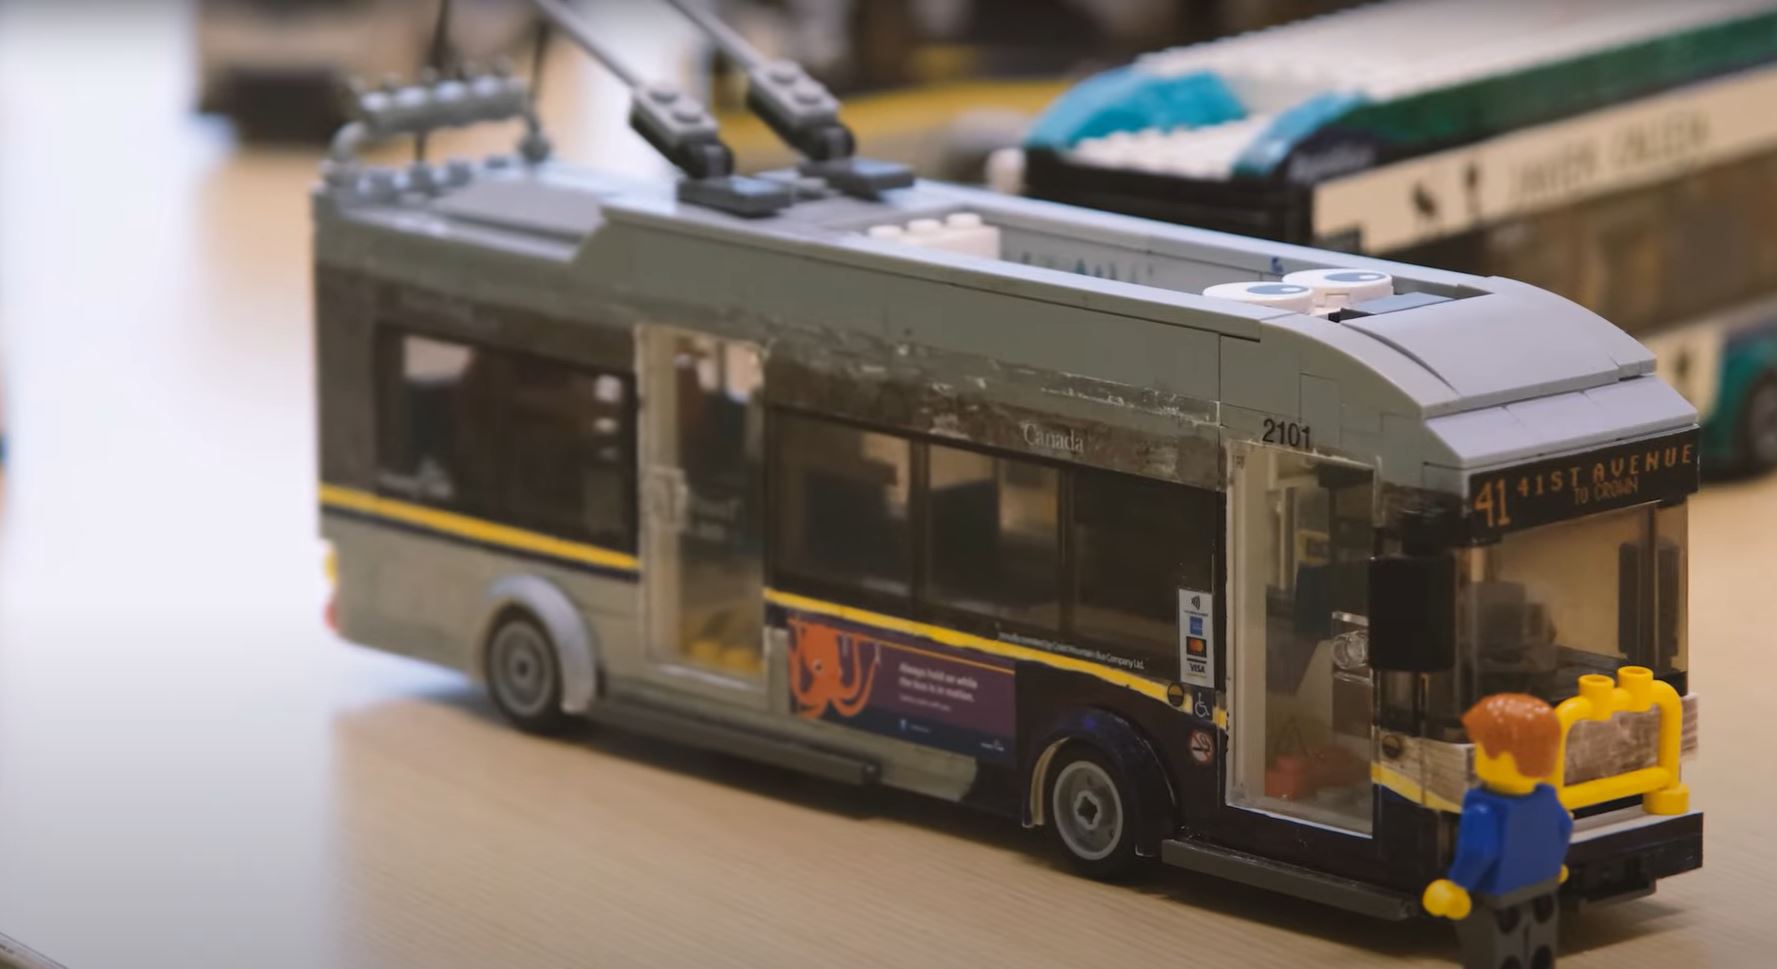 Lego Technic City Bus, Lego School Bus Build